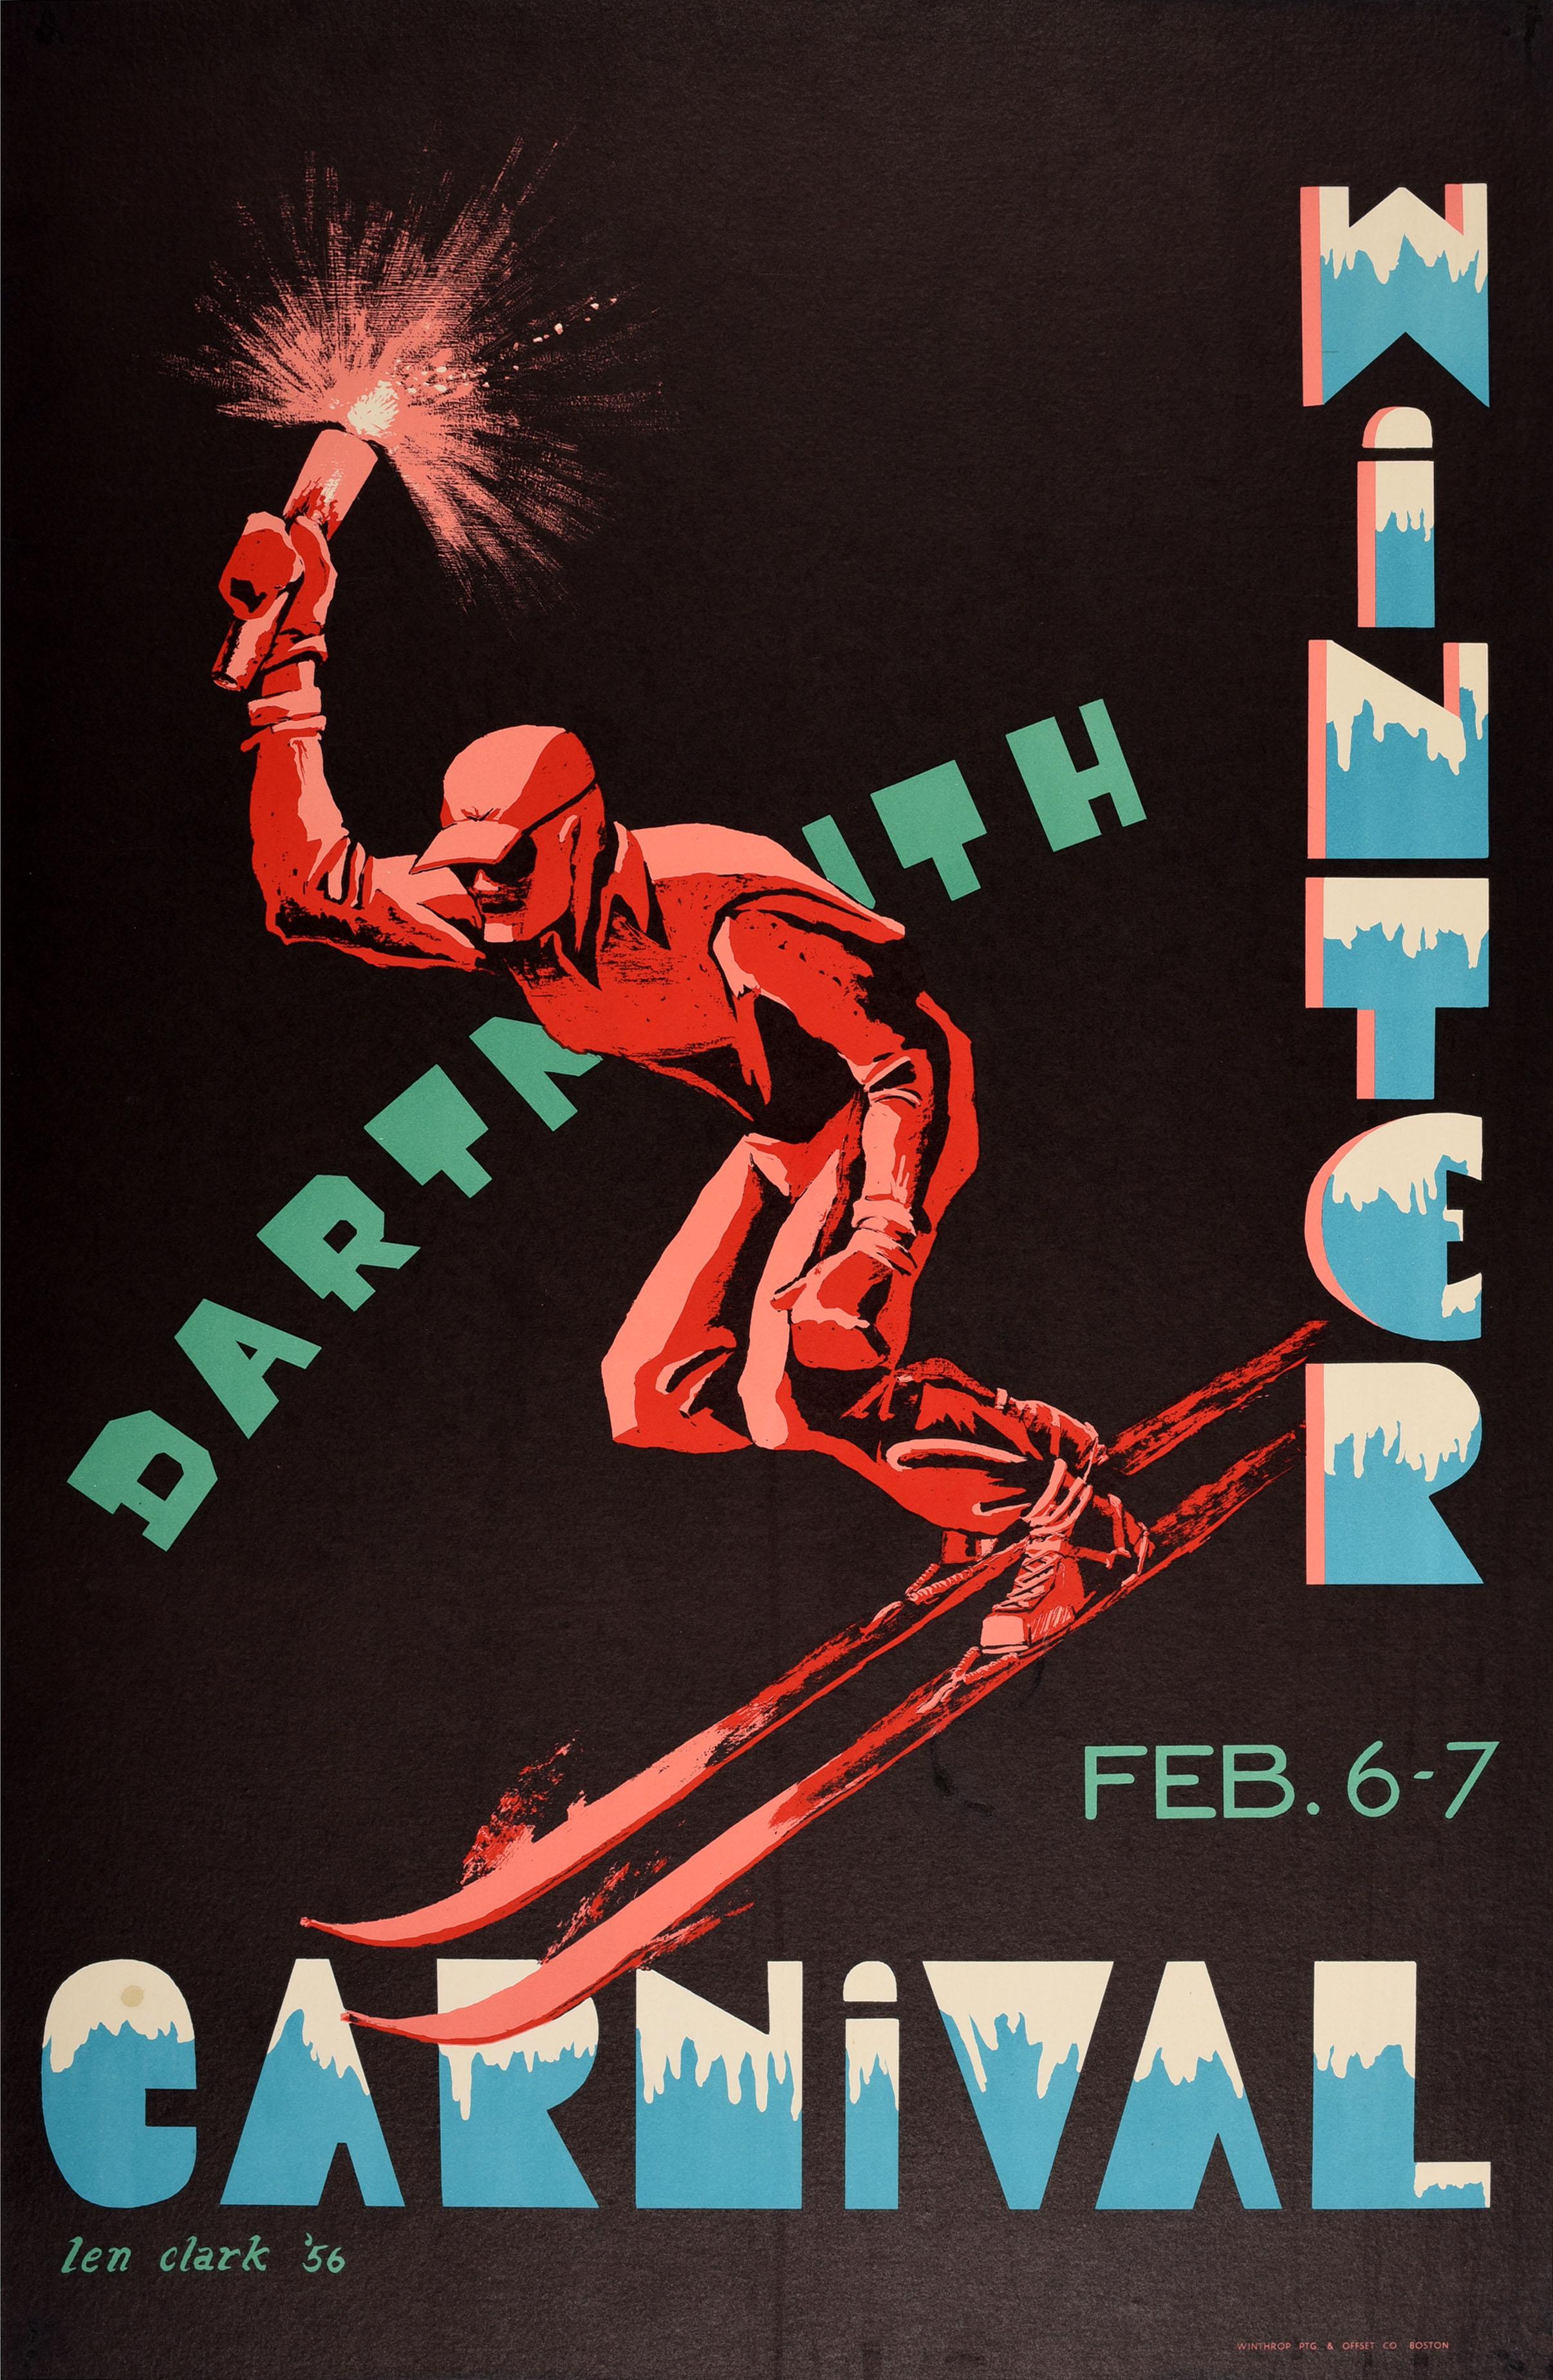 Len Clark Print - Original Vintage Skiing Poster Dartmouth College Winter Carnival 1953 Ski Design